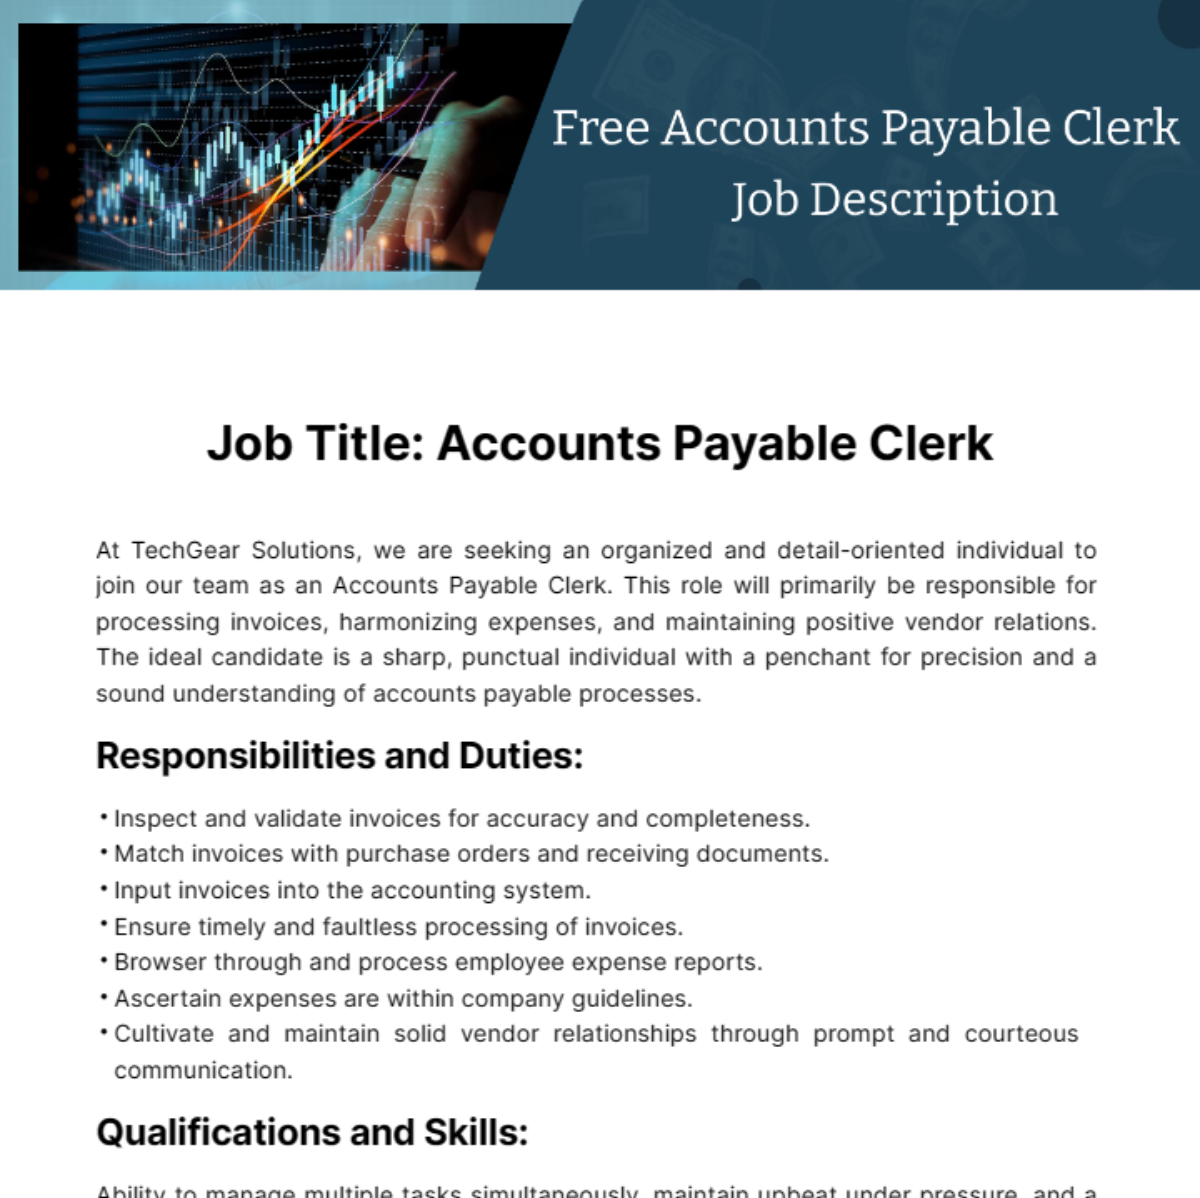 Free Accounts Payable Clerk Job Description Template